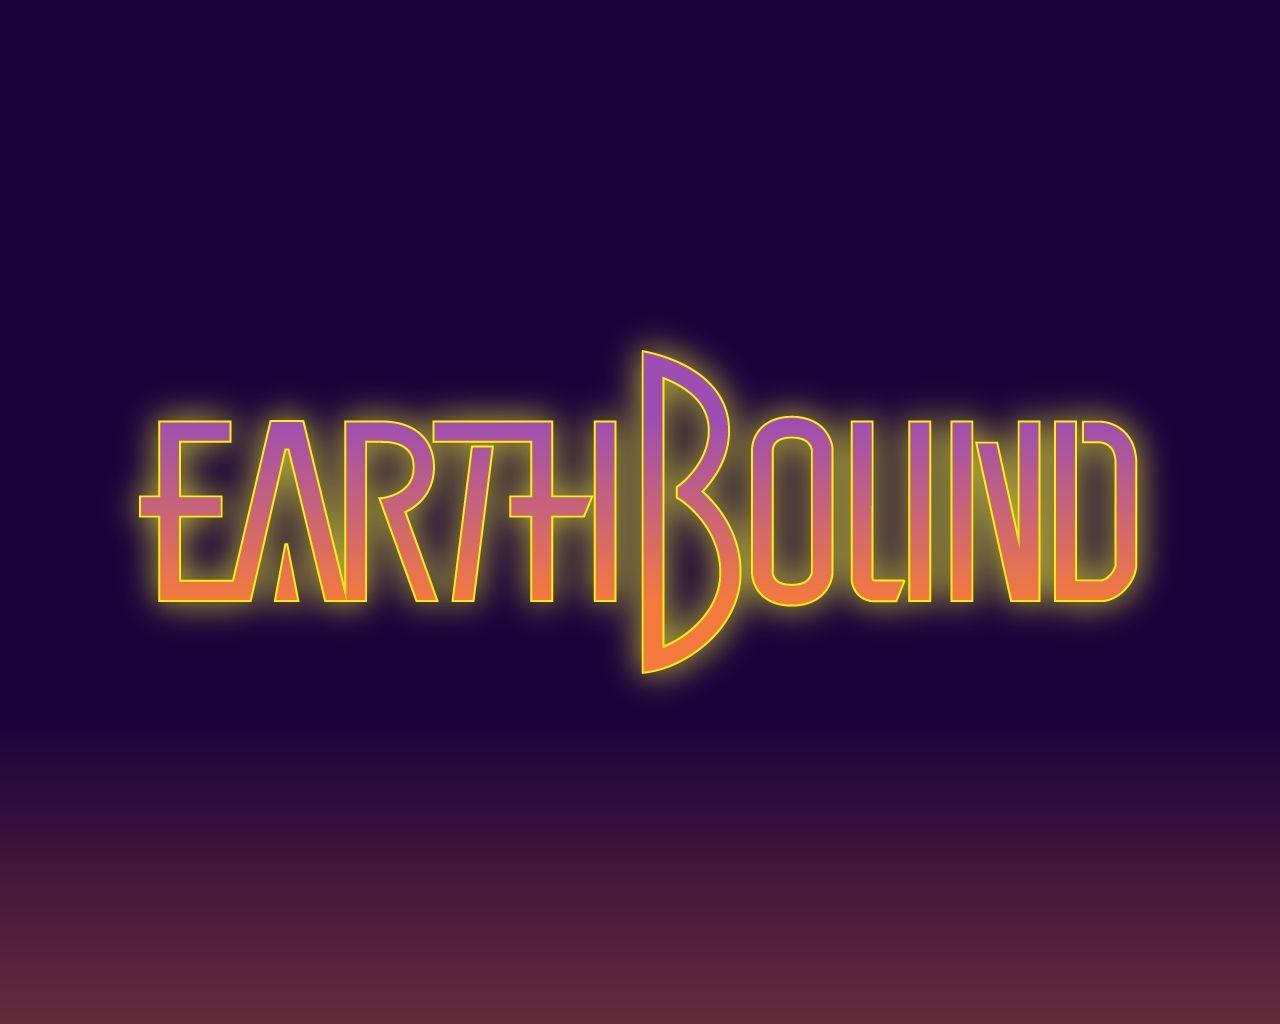 Earthbound Logo - Wallpaper : Earthbound, SNES, game logo 1280x1024 - Fridgy - 1208991 ...